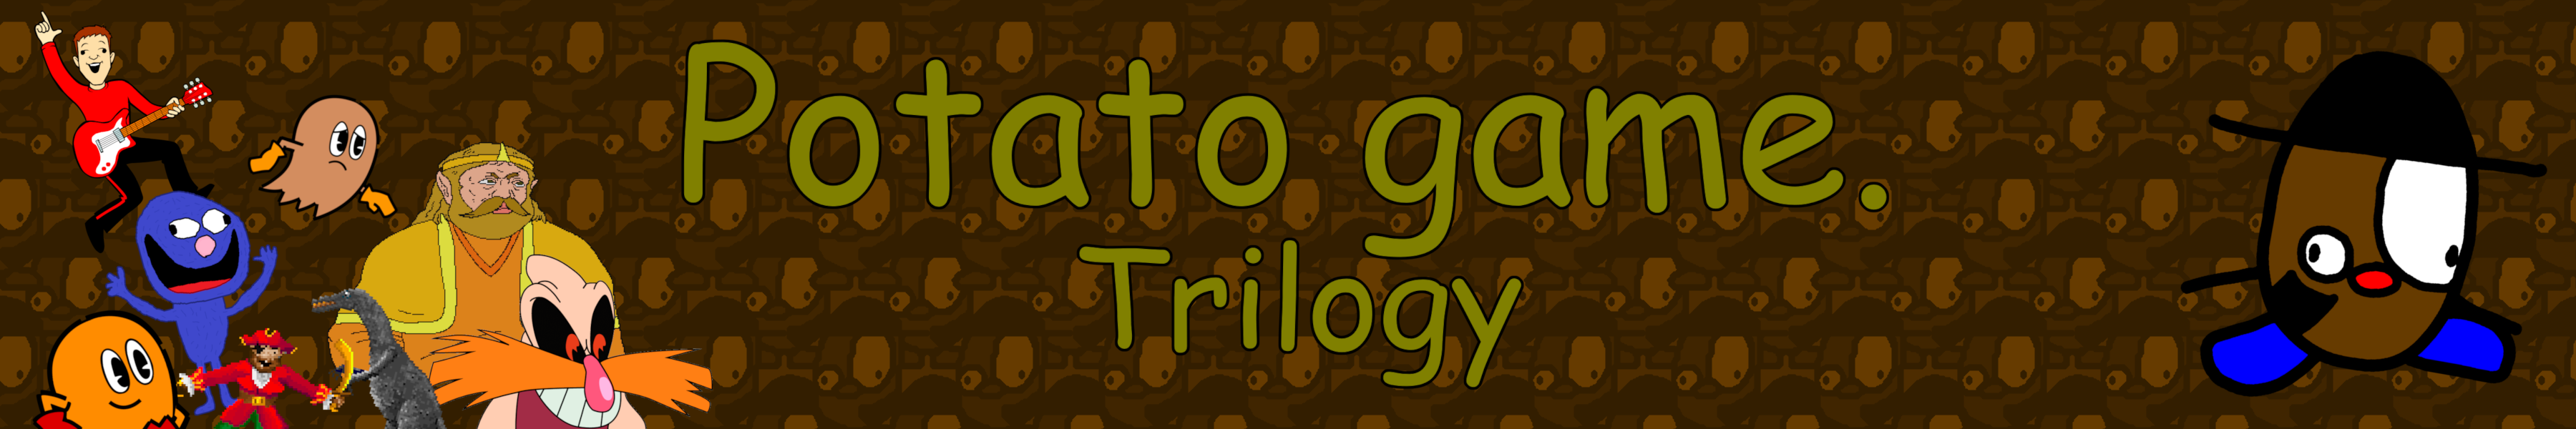 Potato game. Trilogy DEMO